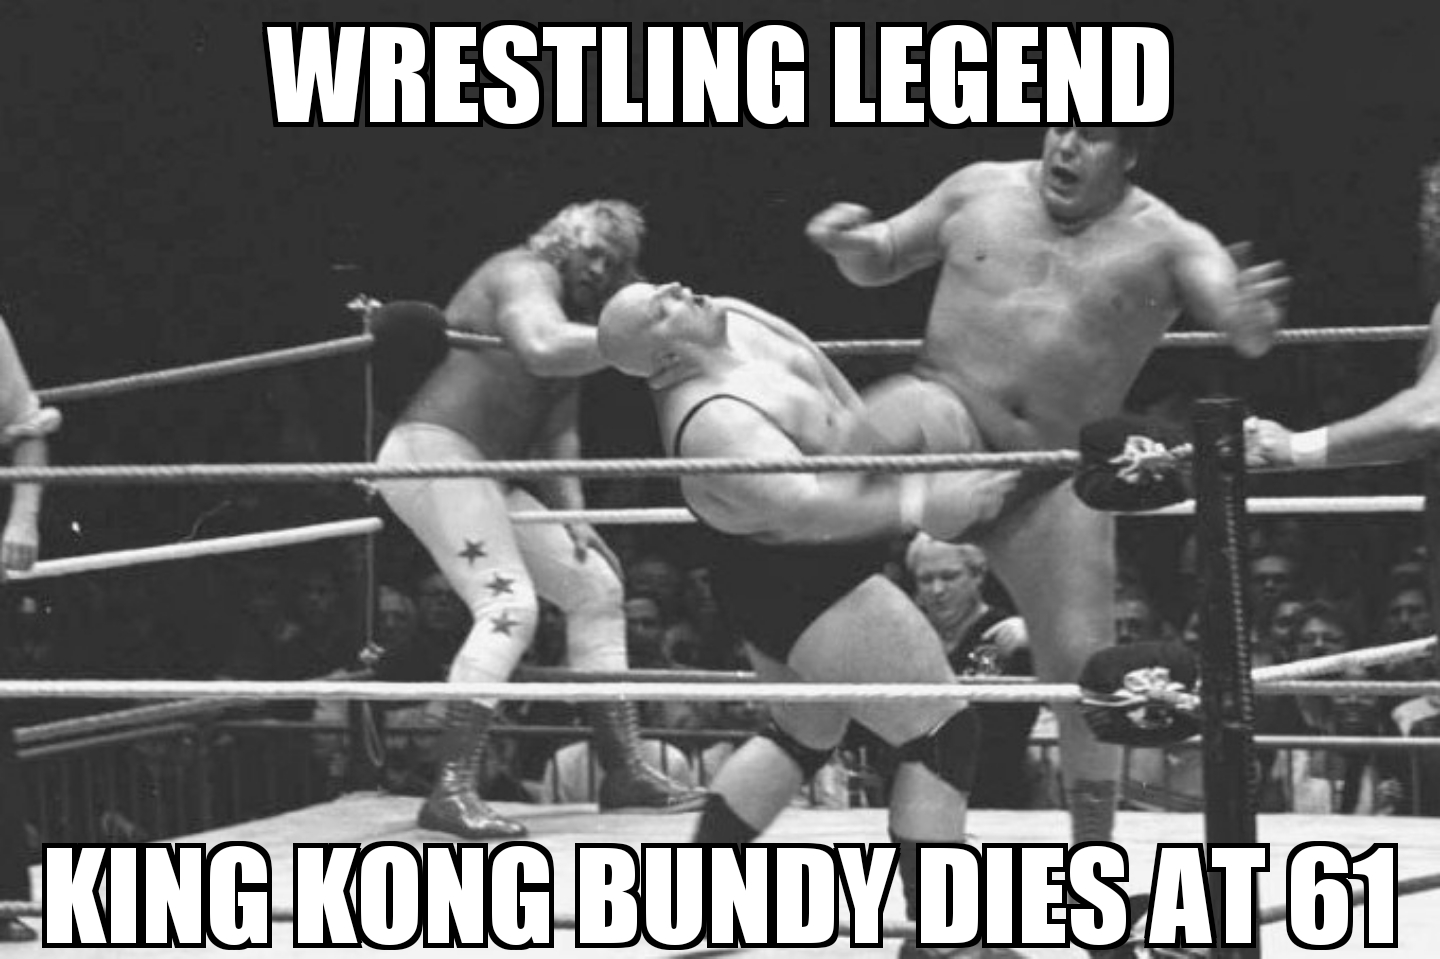 King Kong Bundy dies